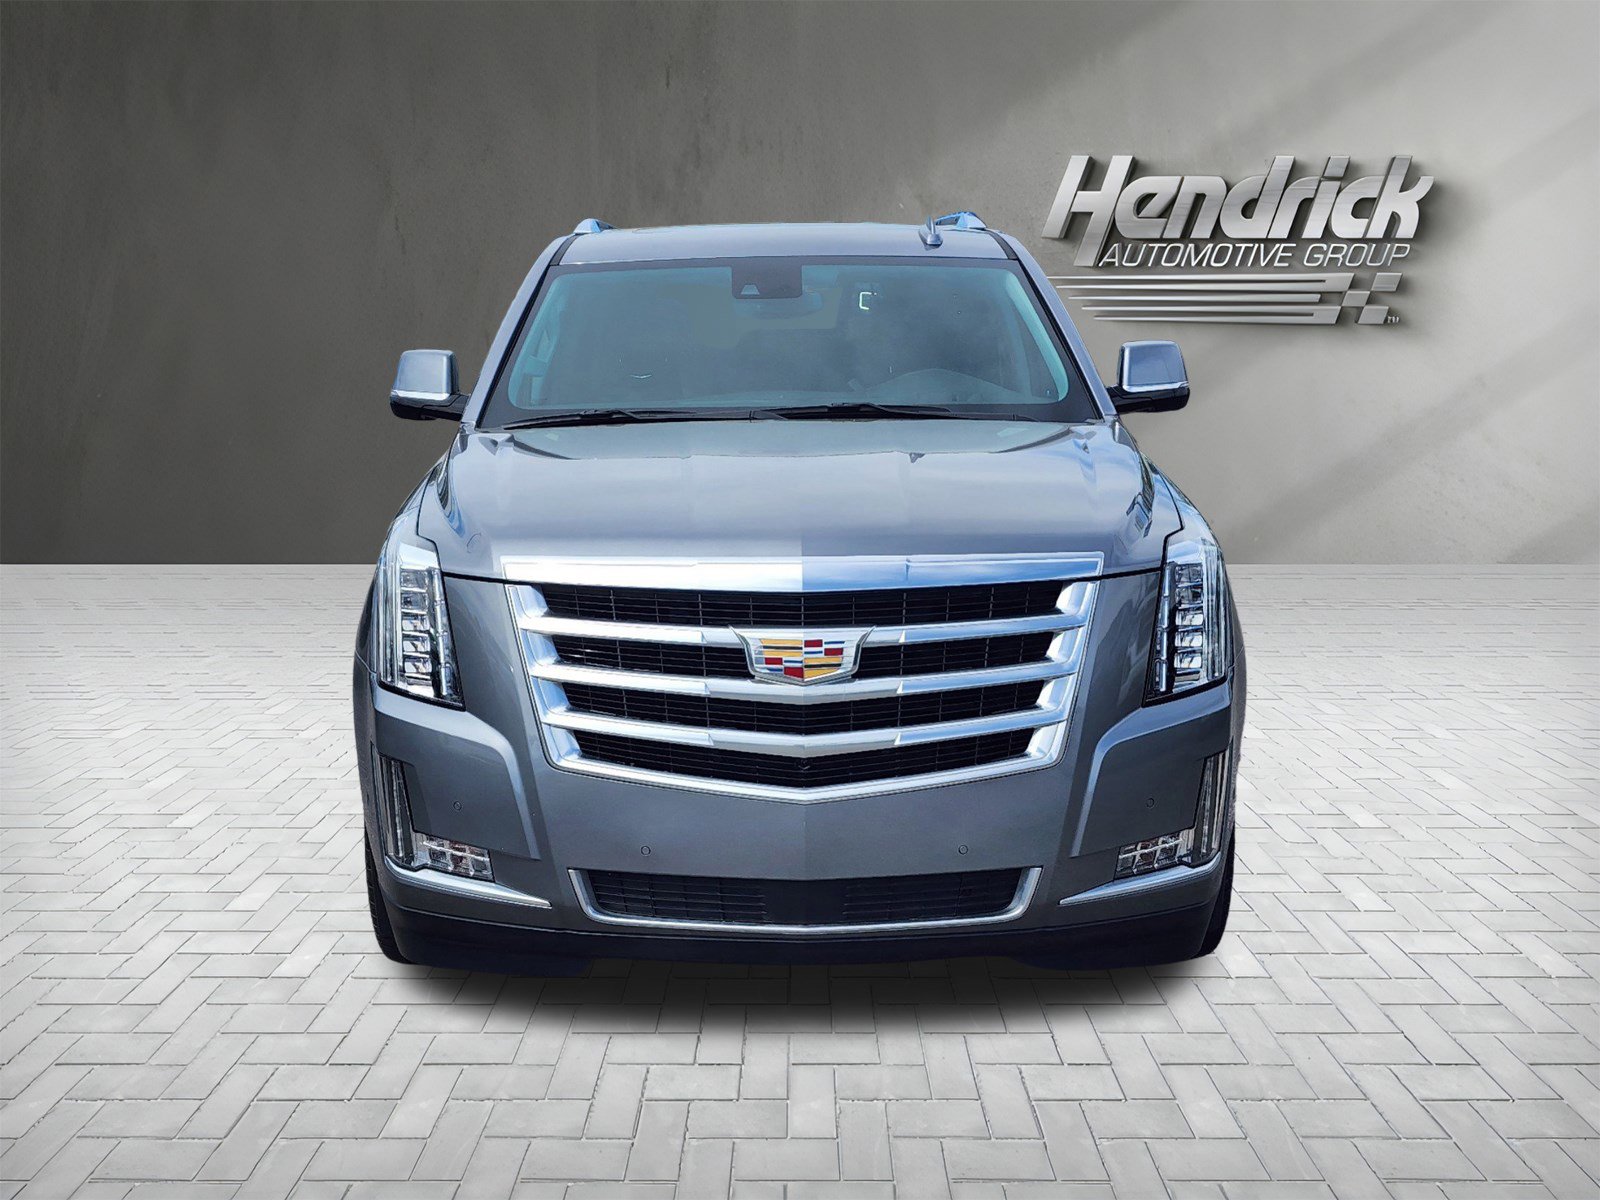 Pre-Owned 2020 Cadillac Escalade ESV Premium Luxury SUV in Cary #SA52833 |  Hendrick Dodge Cary